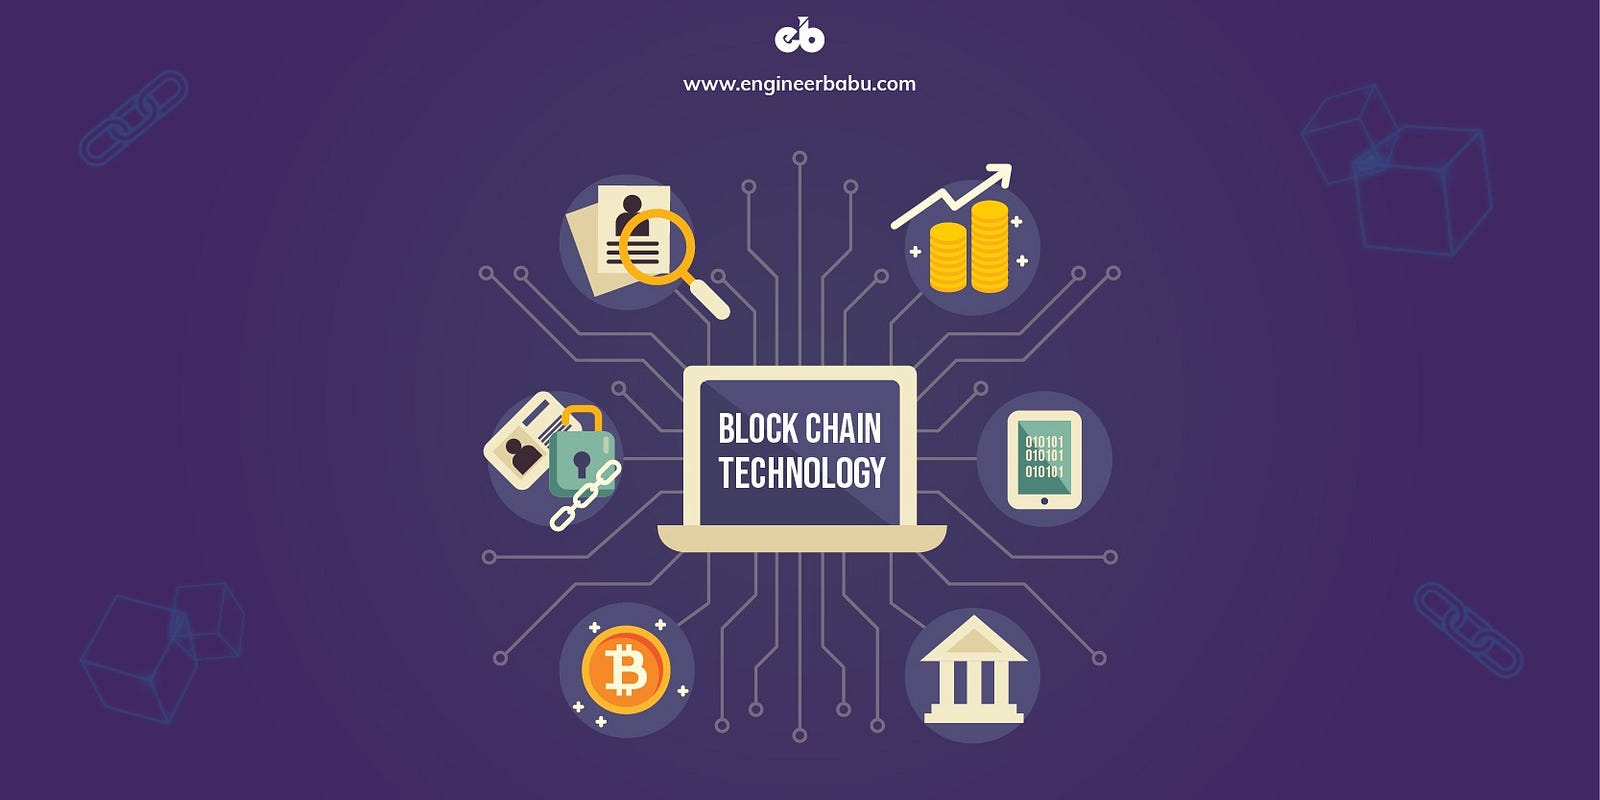 Companies that develop blockchain technology